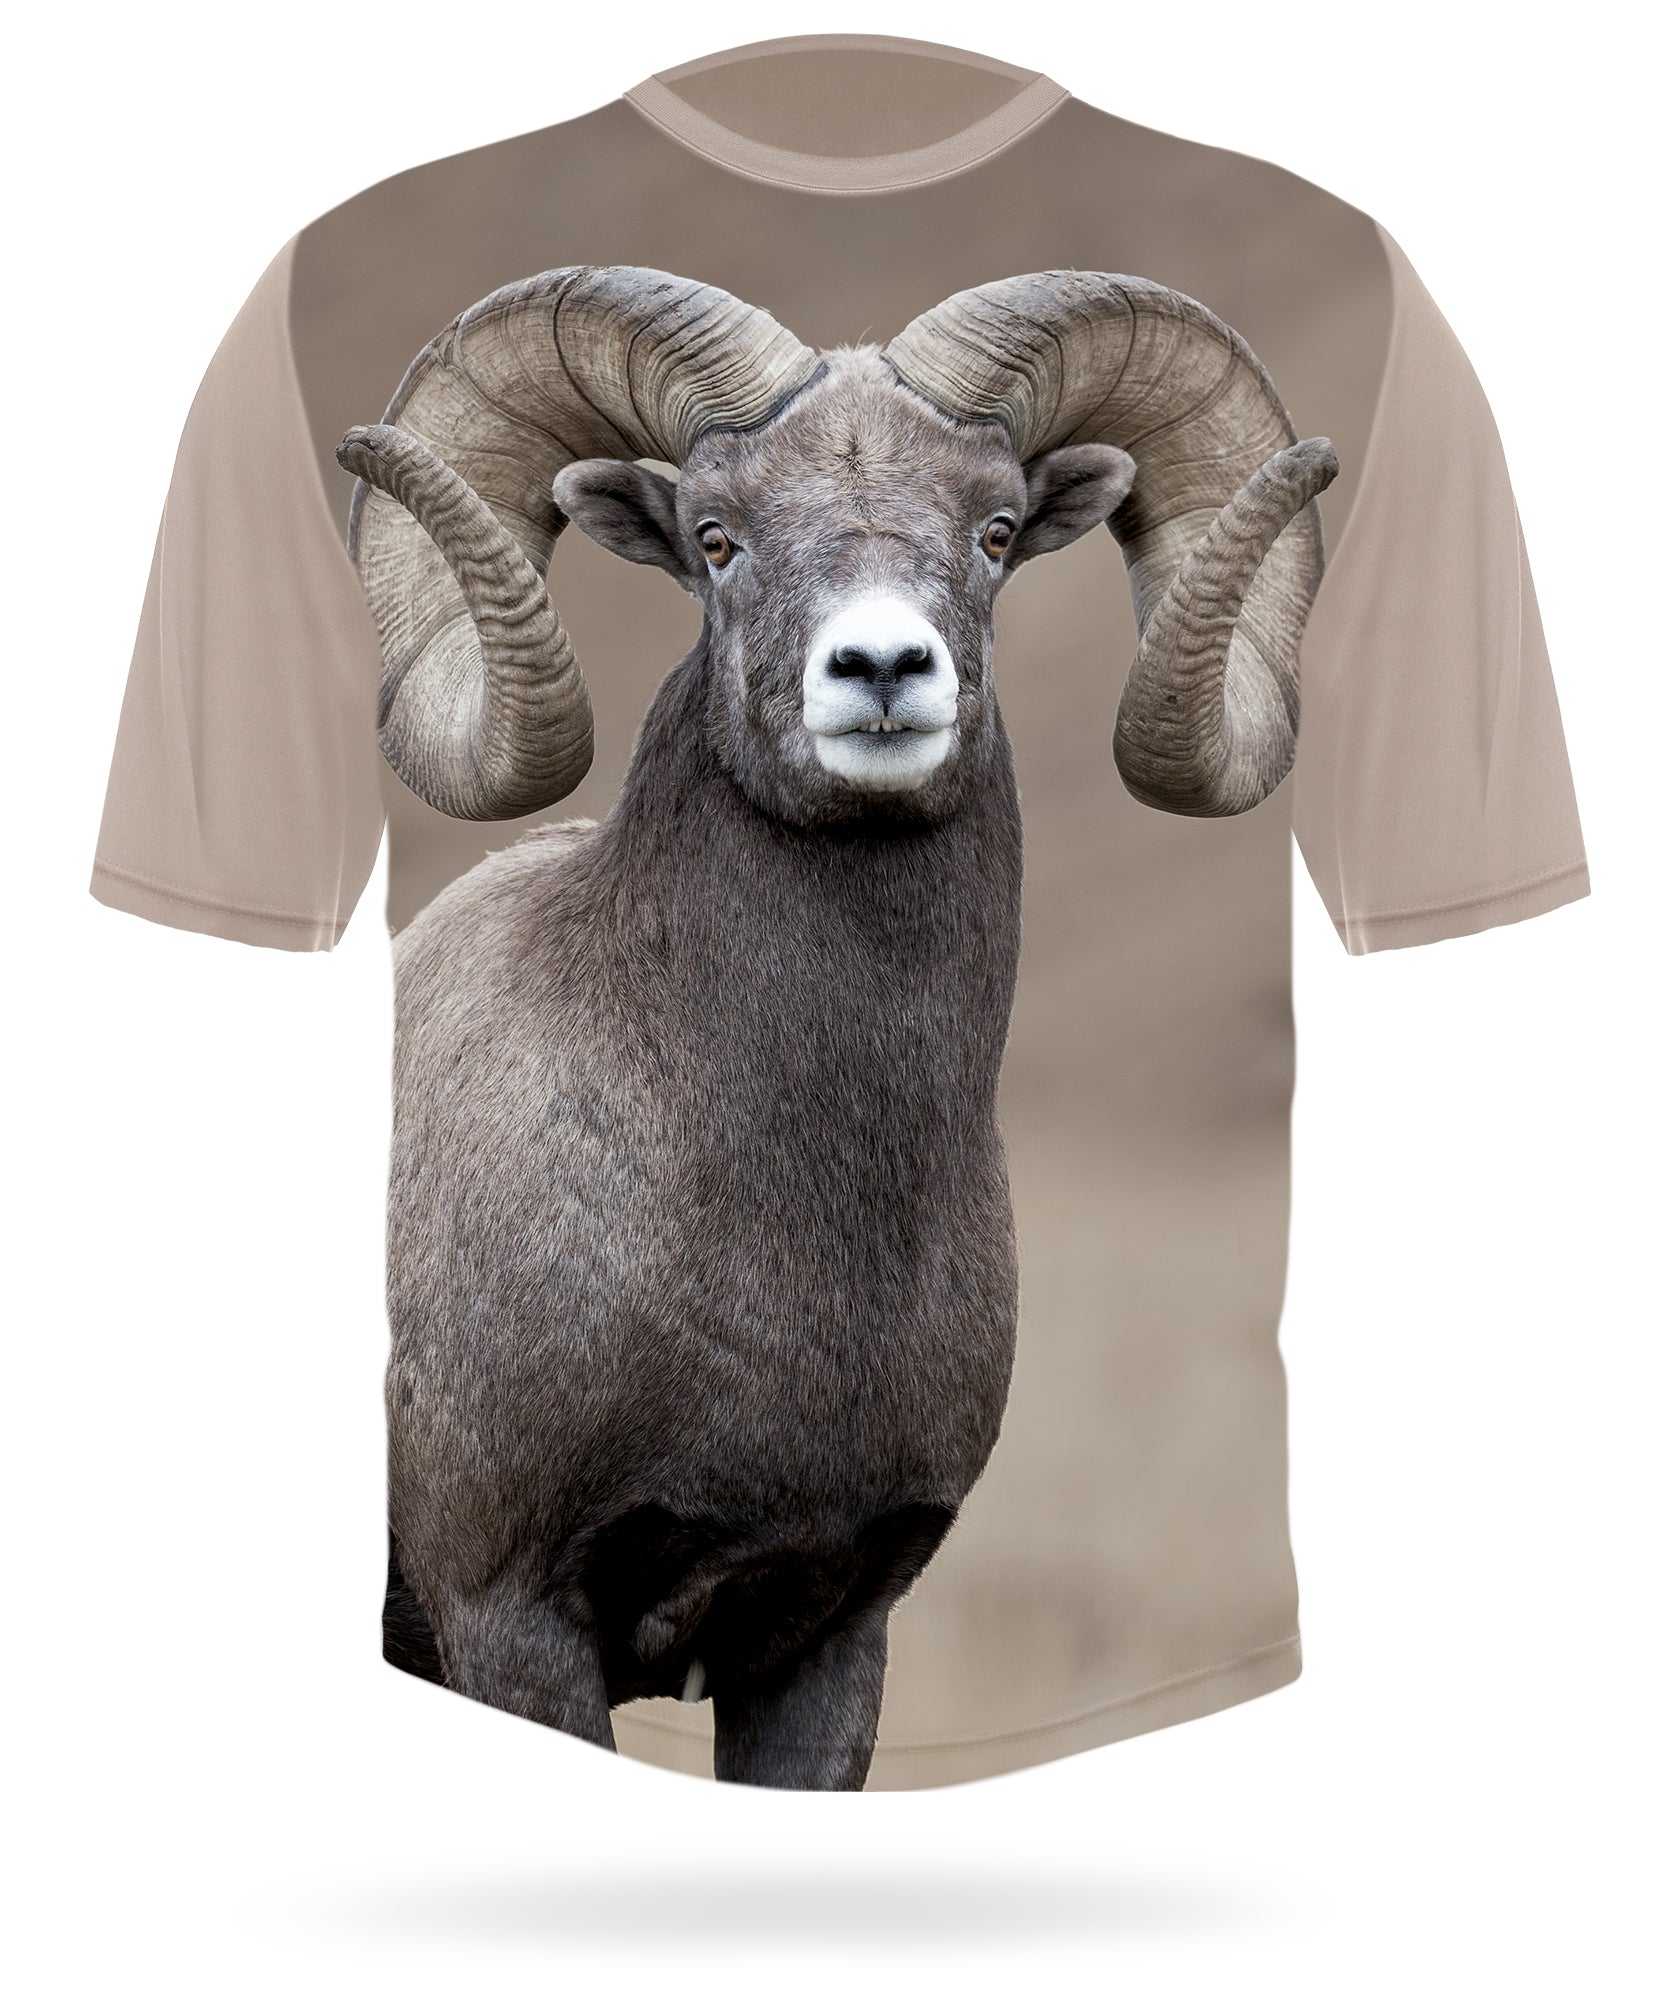 Short sleeve Bighorn sheep